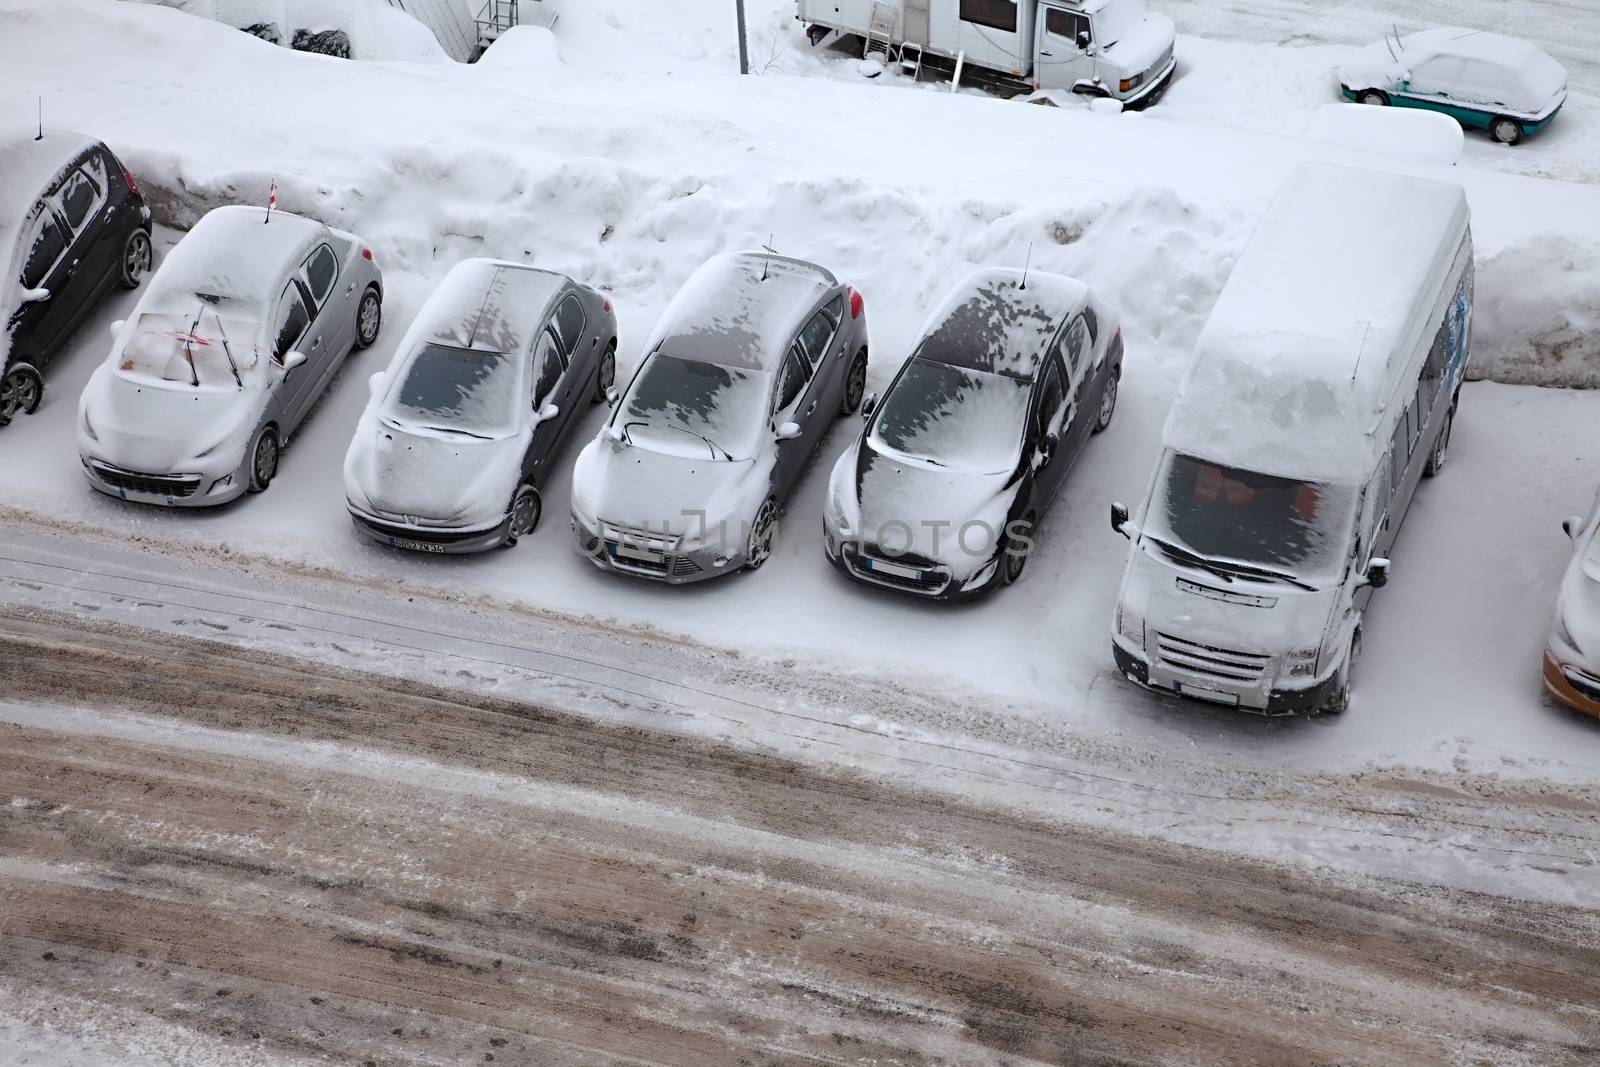 Winter parking by Gudella